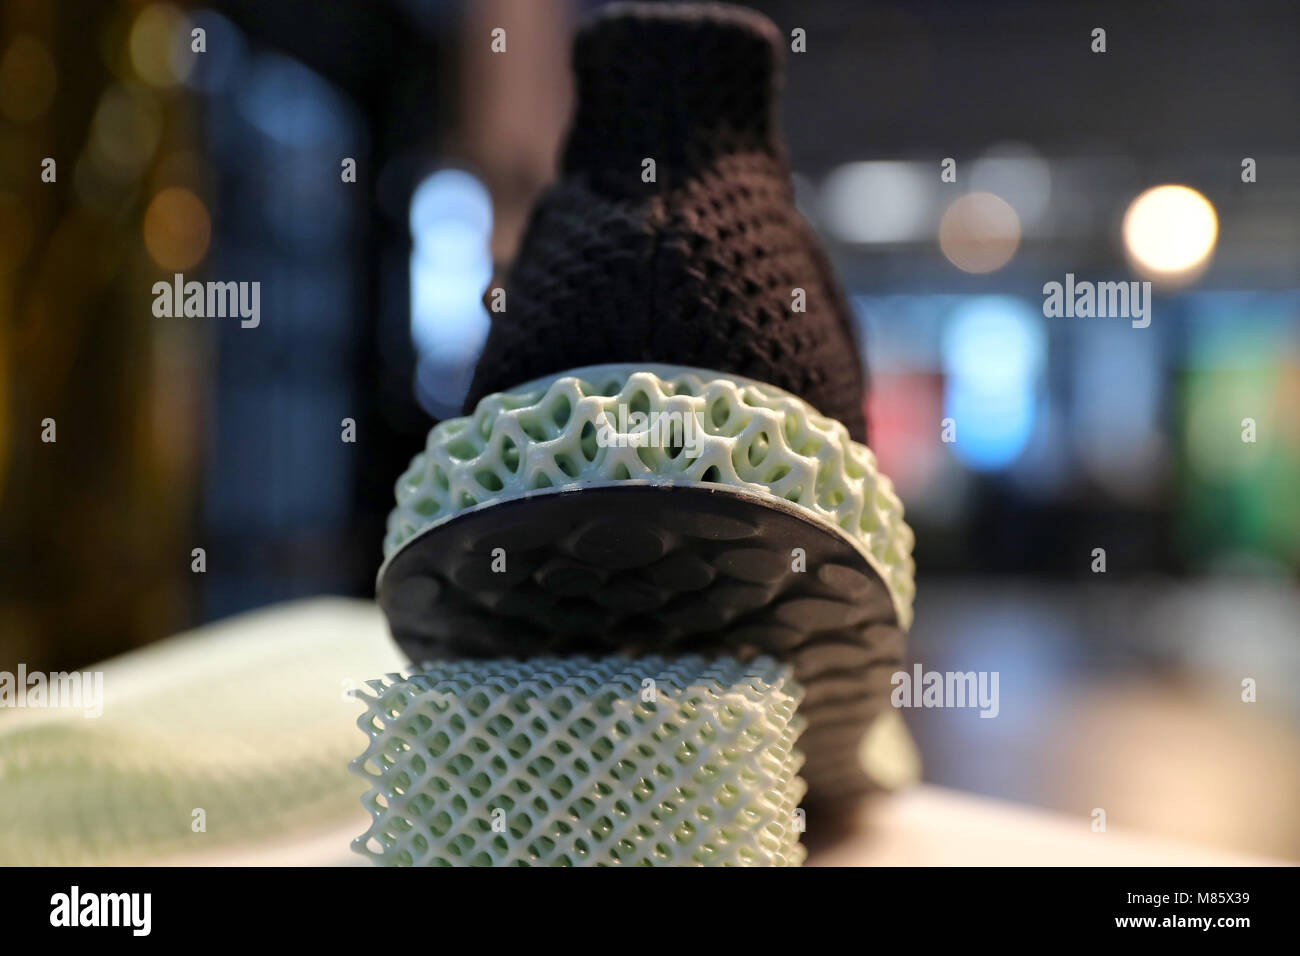 Adidas logo on sole of shoe fotografías e imágenes de alta resolución -  Alamy